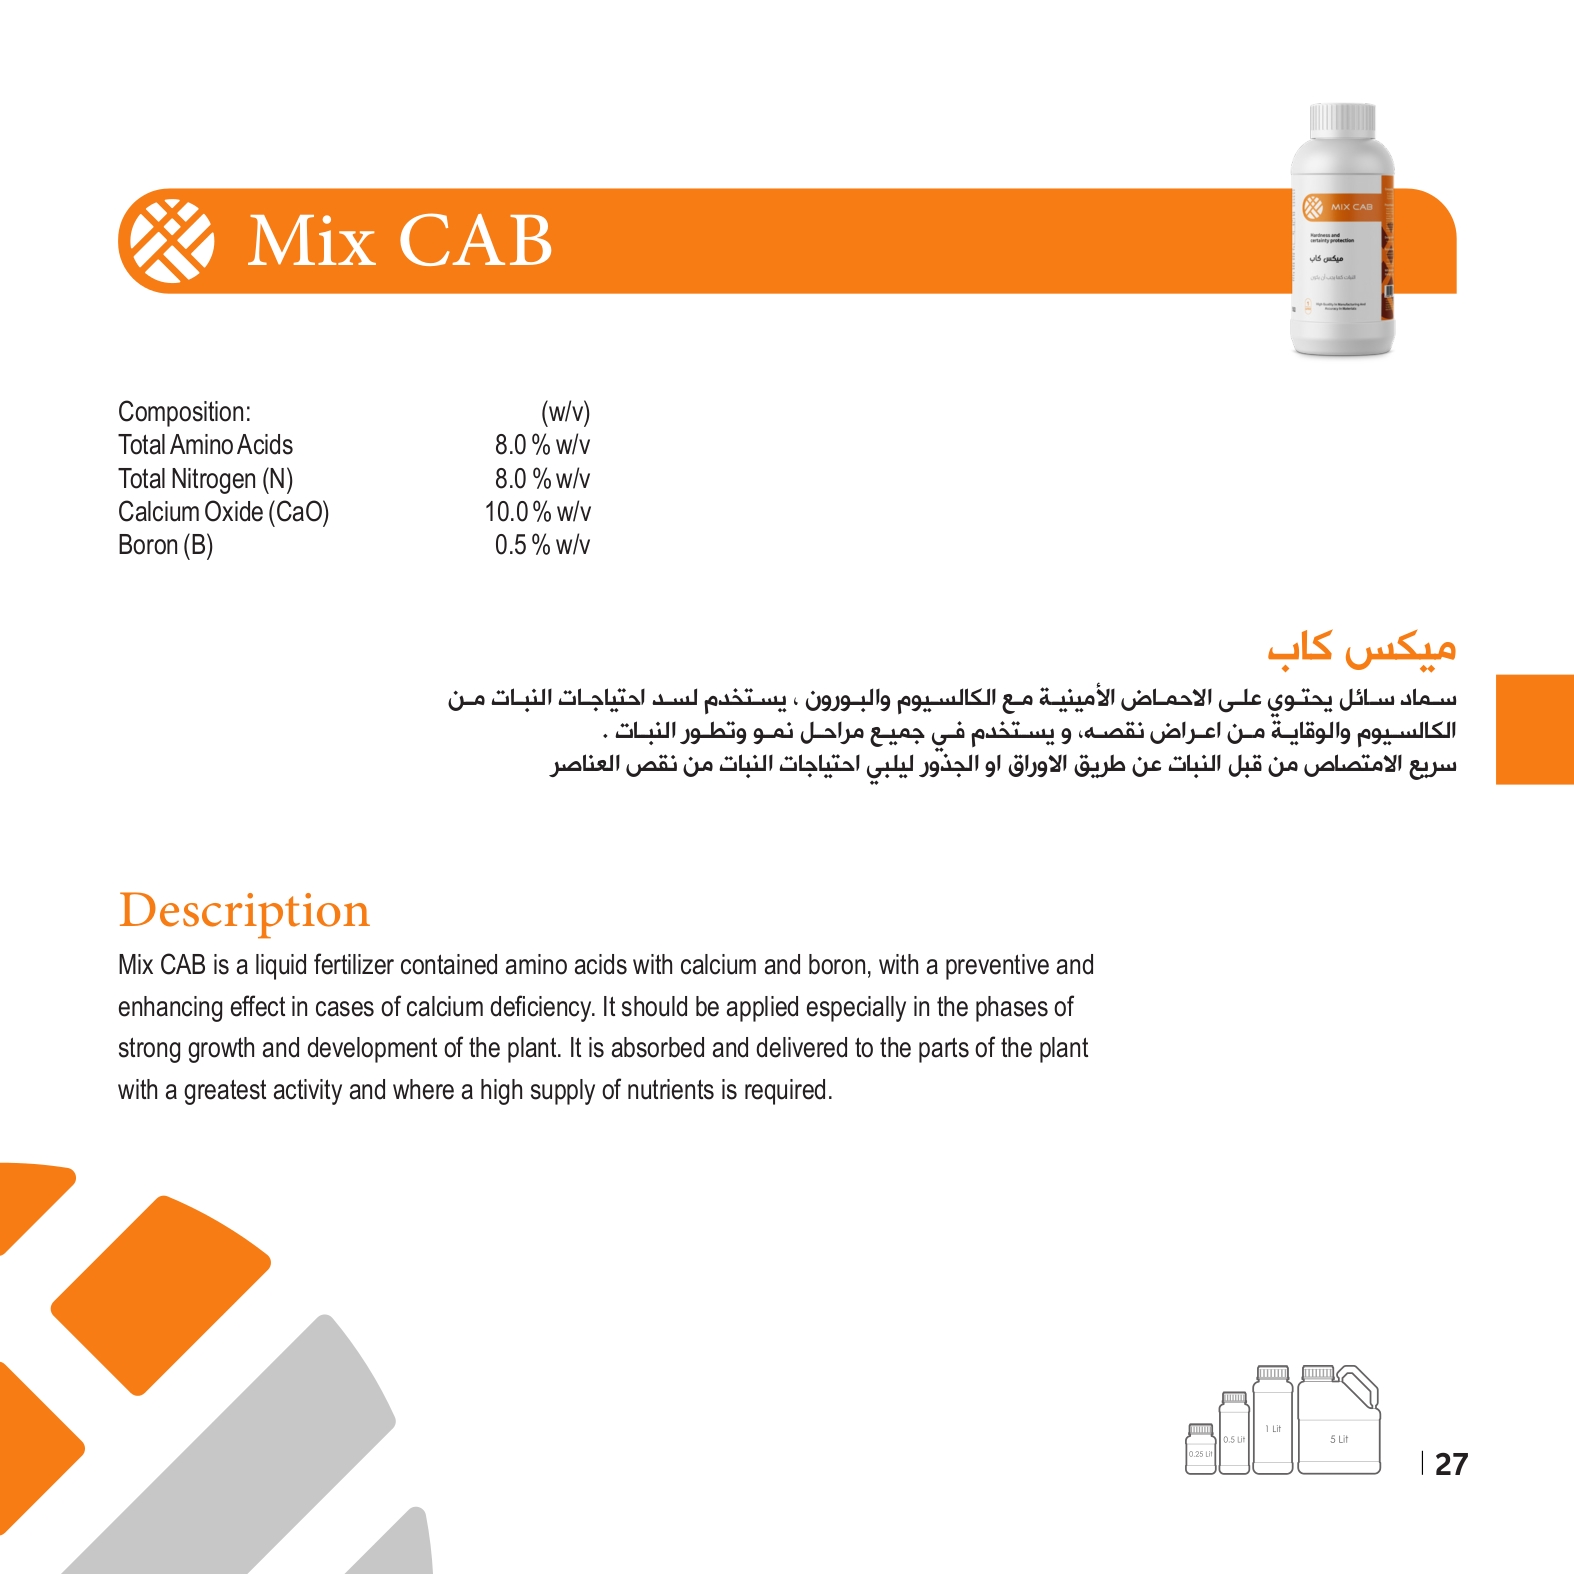 Mix CAB